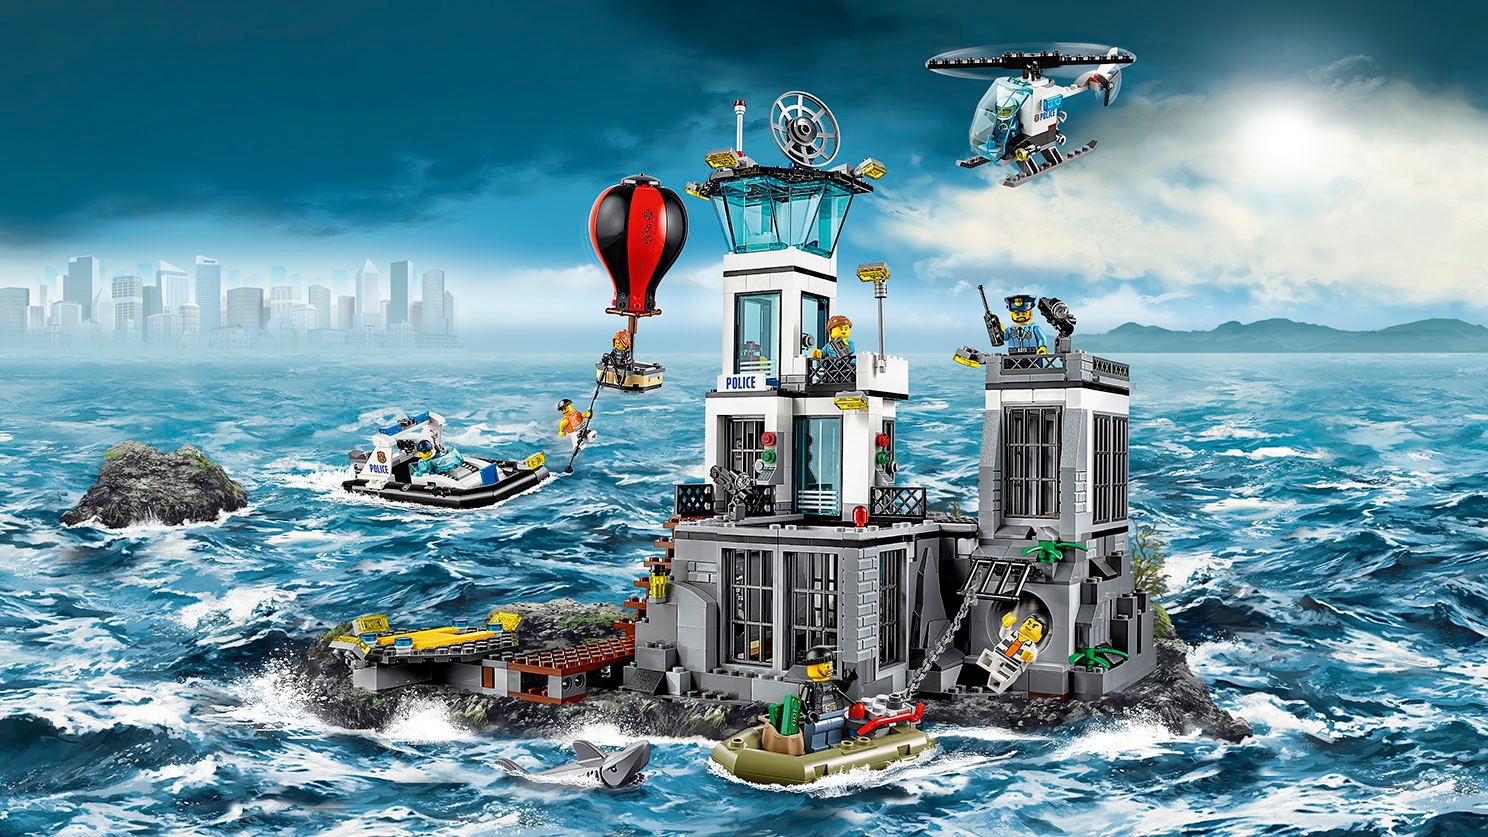 Prison 60130 - LEGO® City Sets - LEGO.com for kids